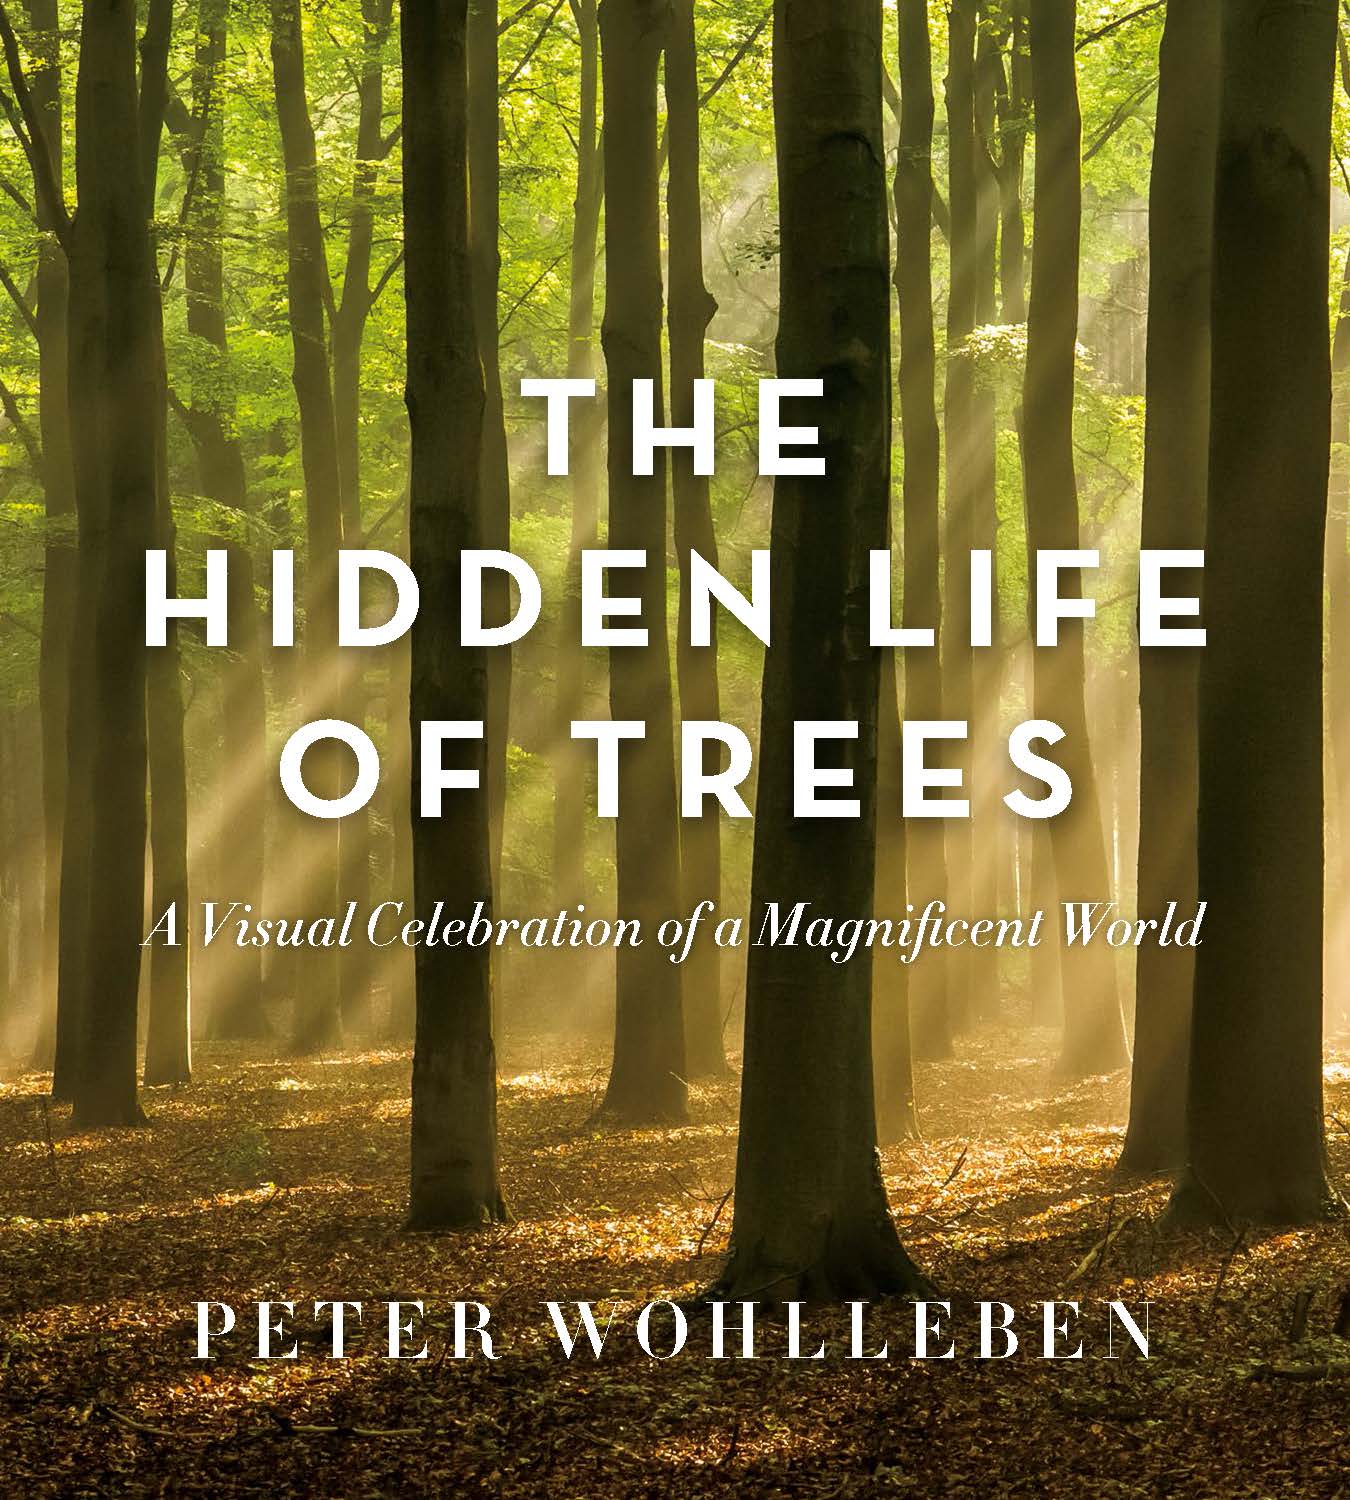 the hidden life of trees book summary